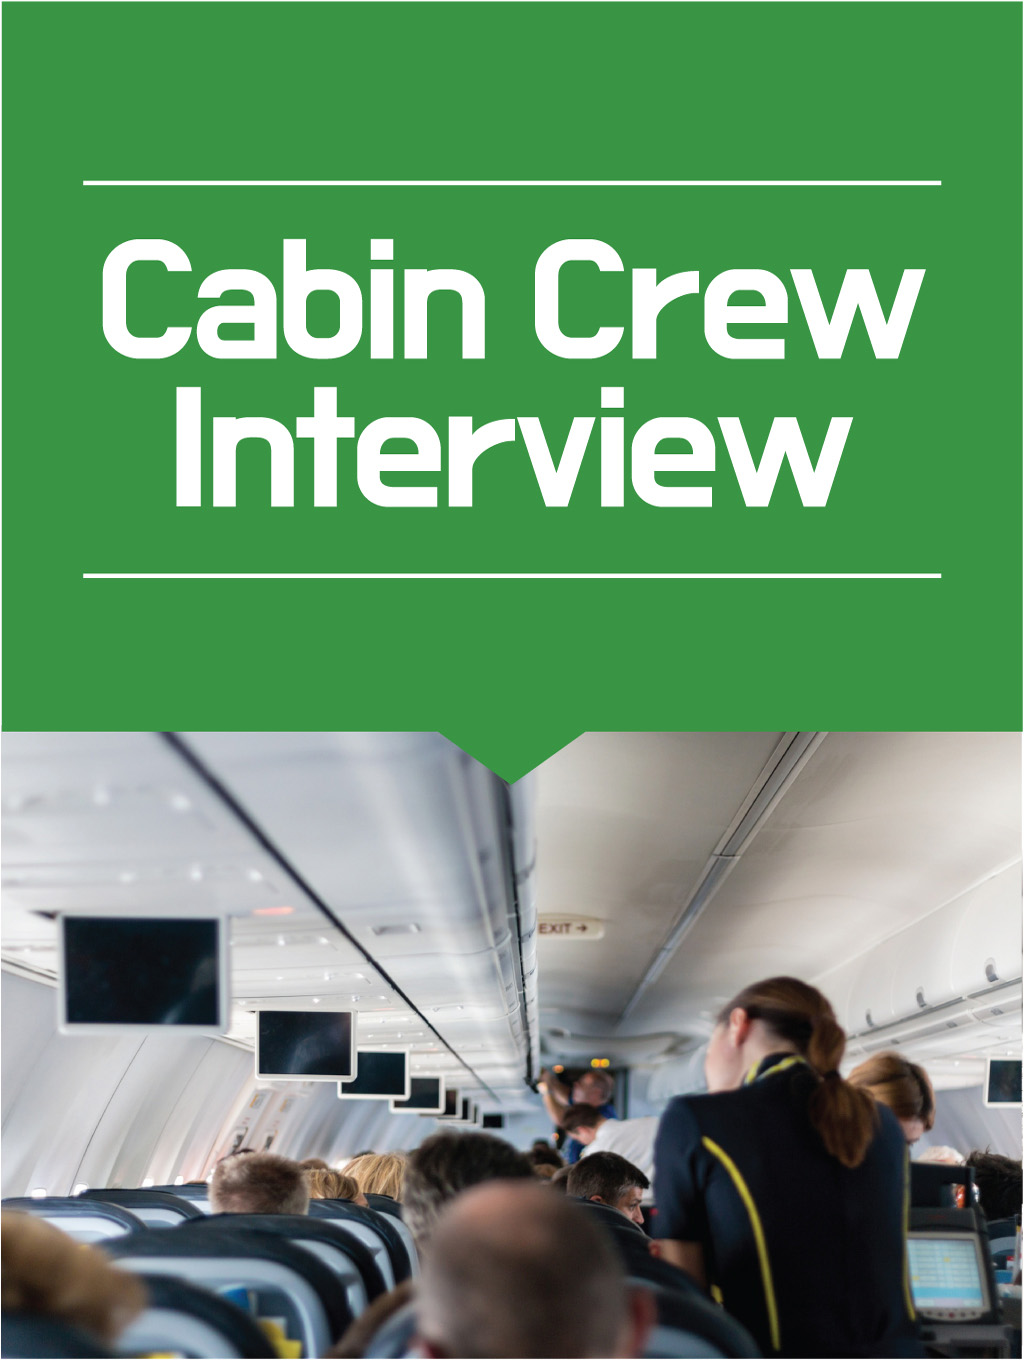 Cabin Crew Interview (승무원 면접)